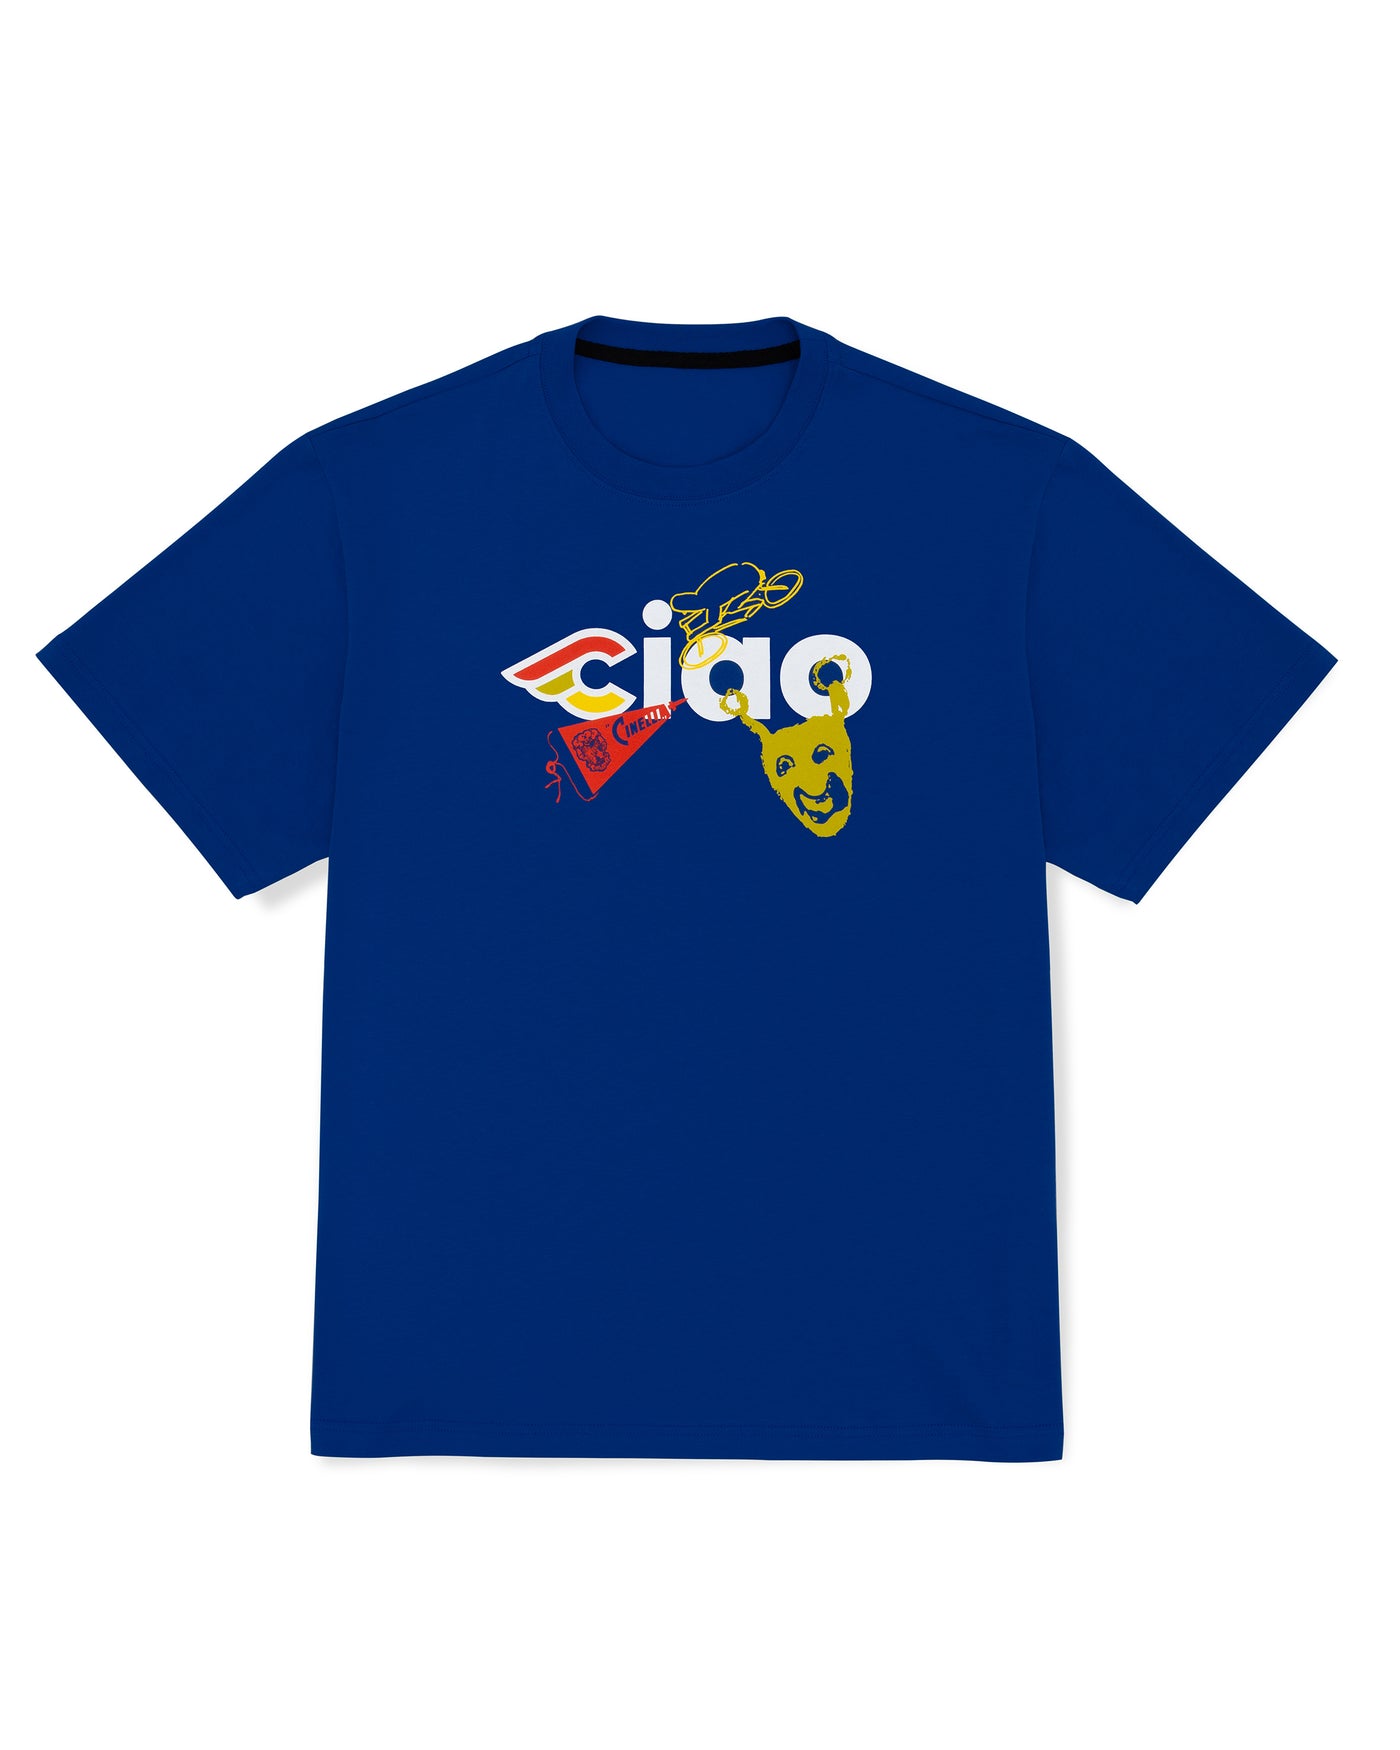 T-SHIRT CIAO ICONS BLUE NAVY, T-Shirt, IMG.1